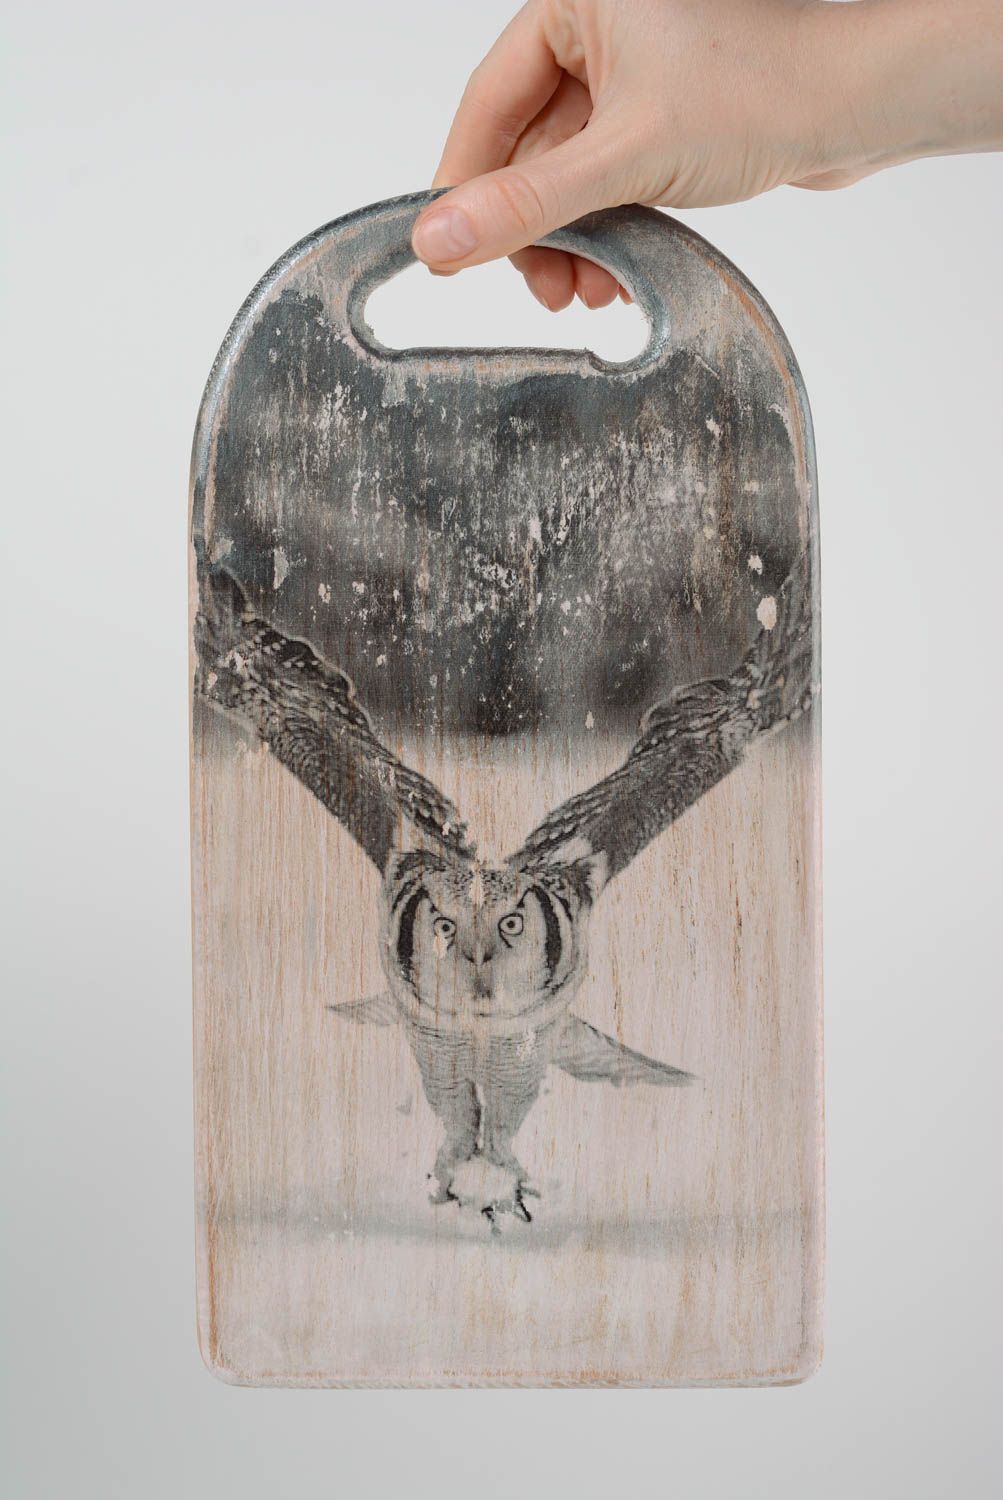 Unusual beautiful handmade decoupage wooden chopping board with owl image photo 5